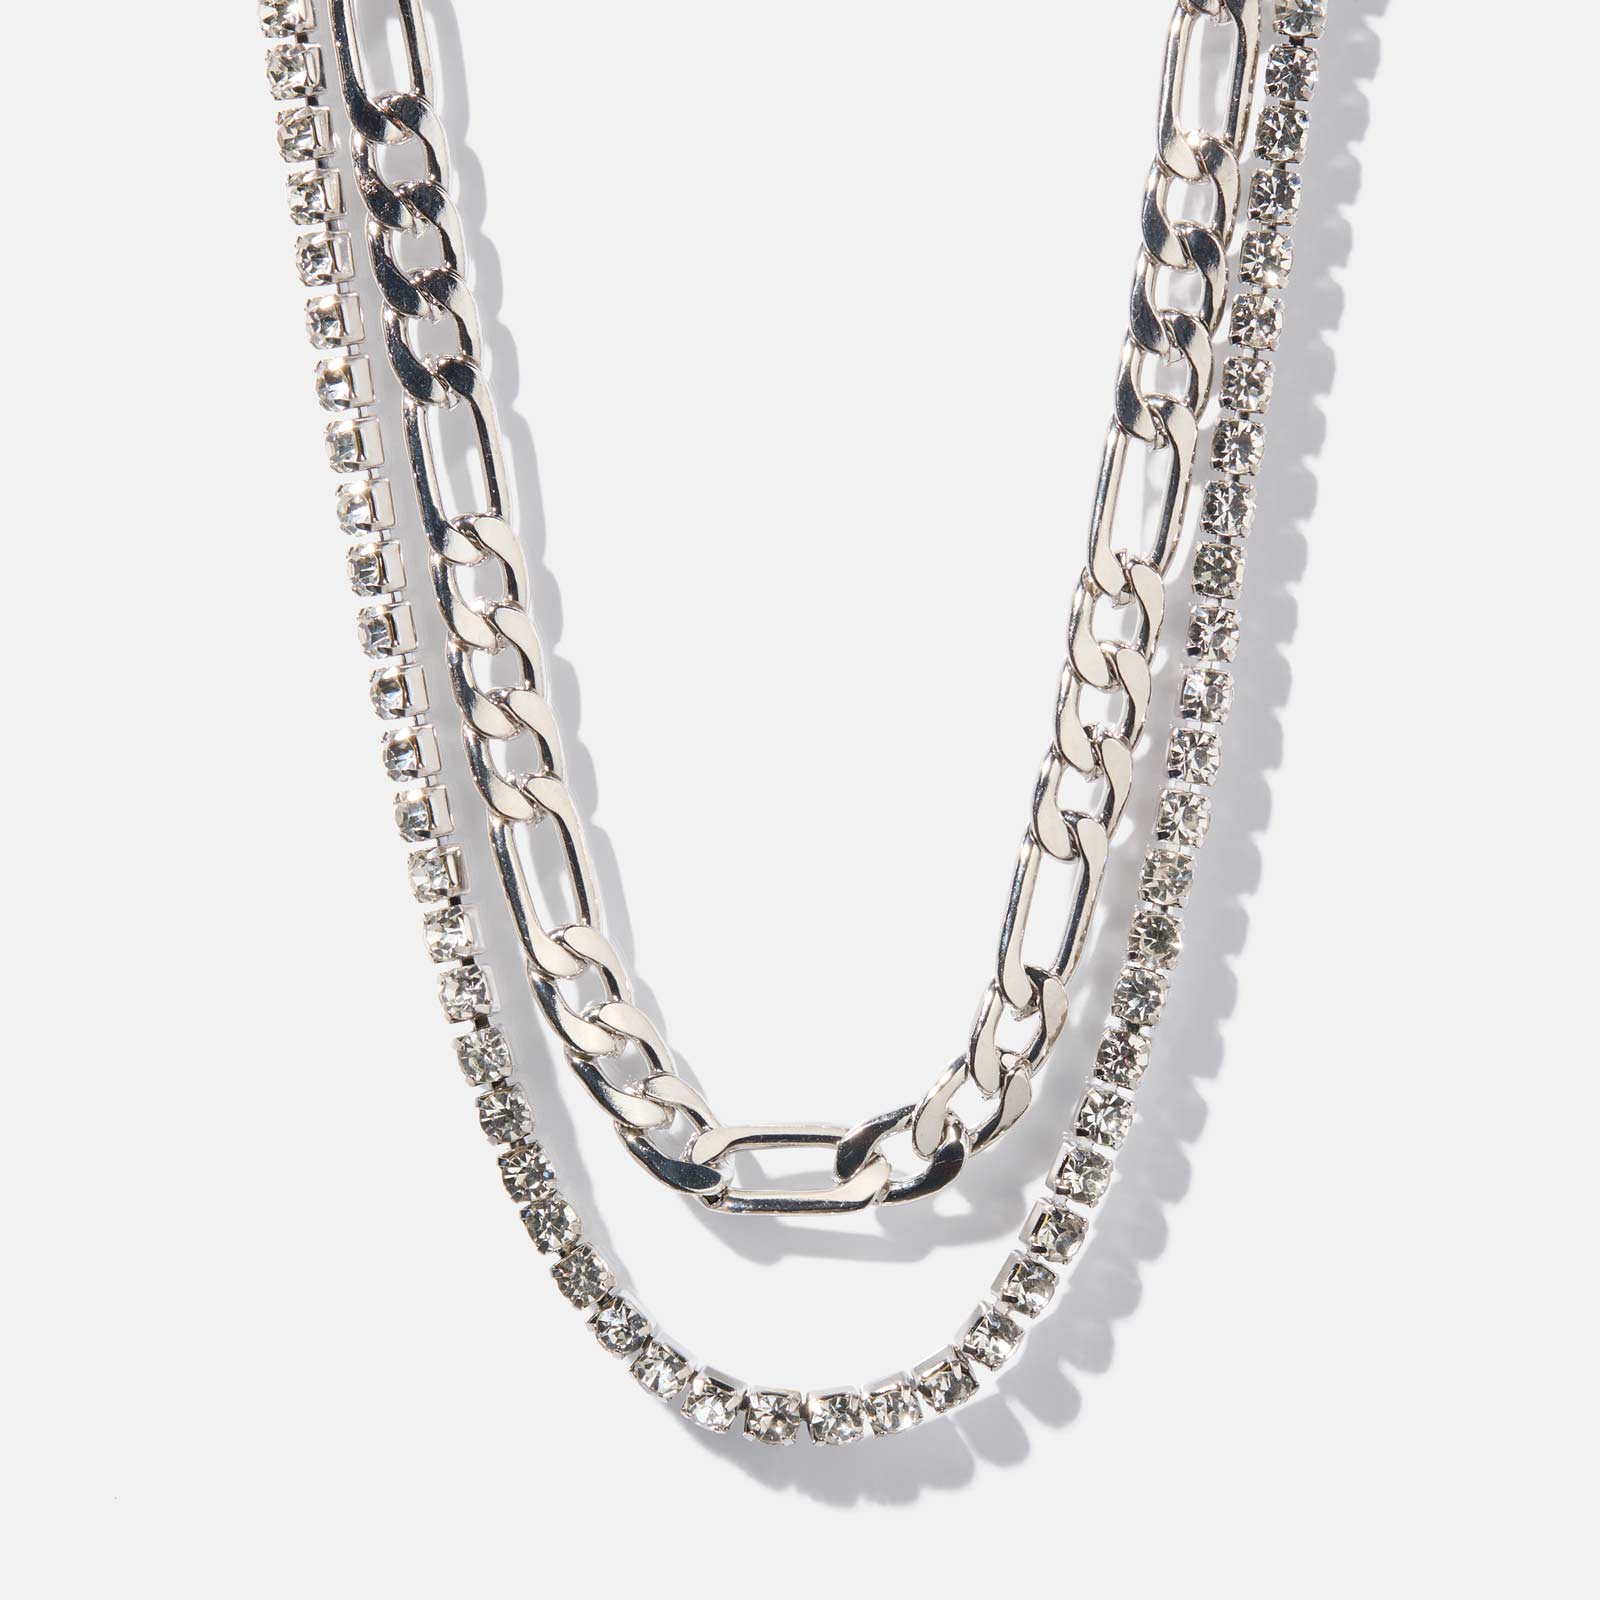 2-radigt silverfärgat halsband – kedjor 40,44+6cm